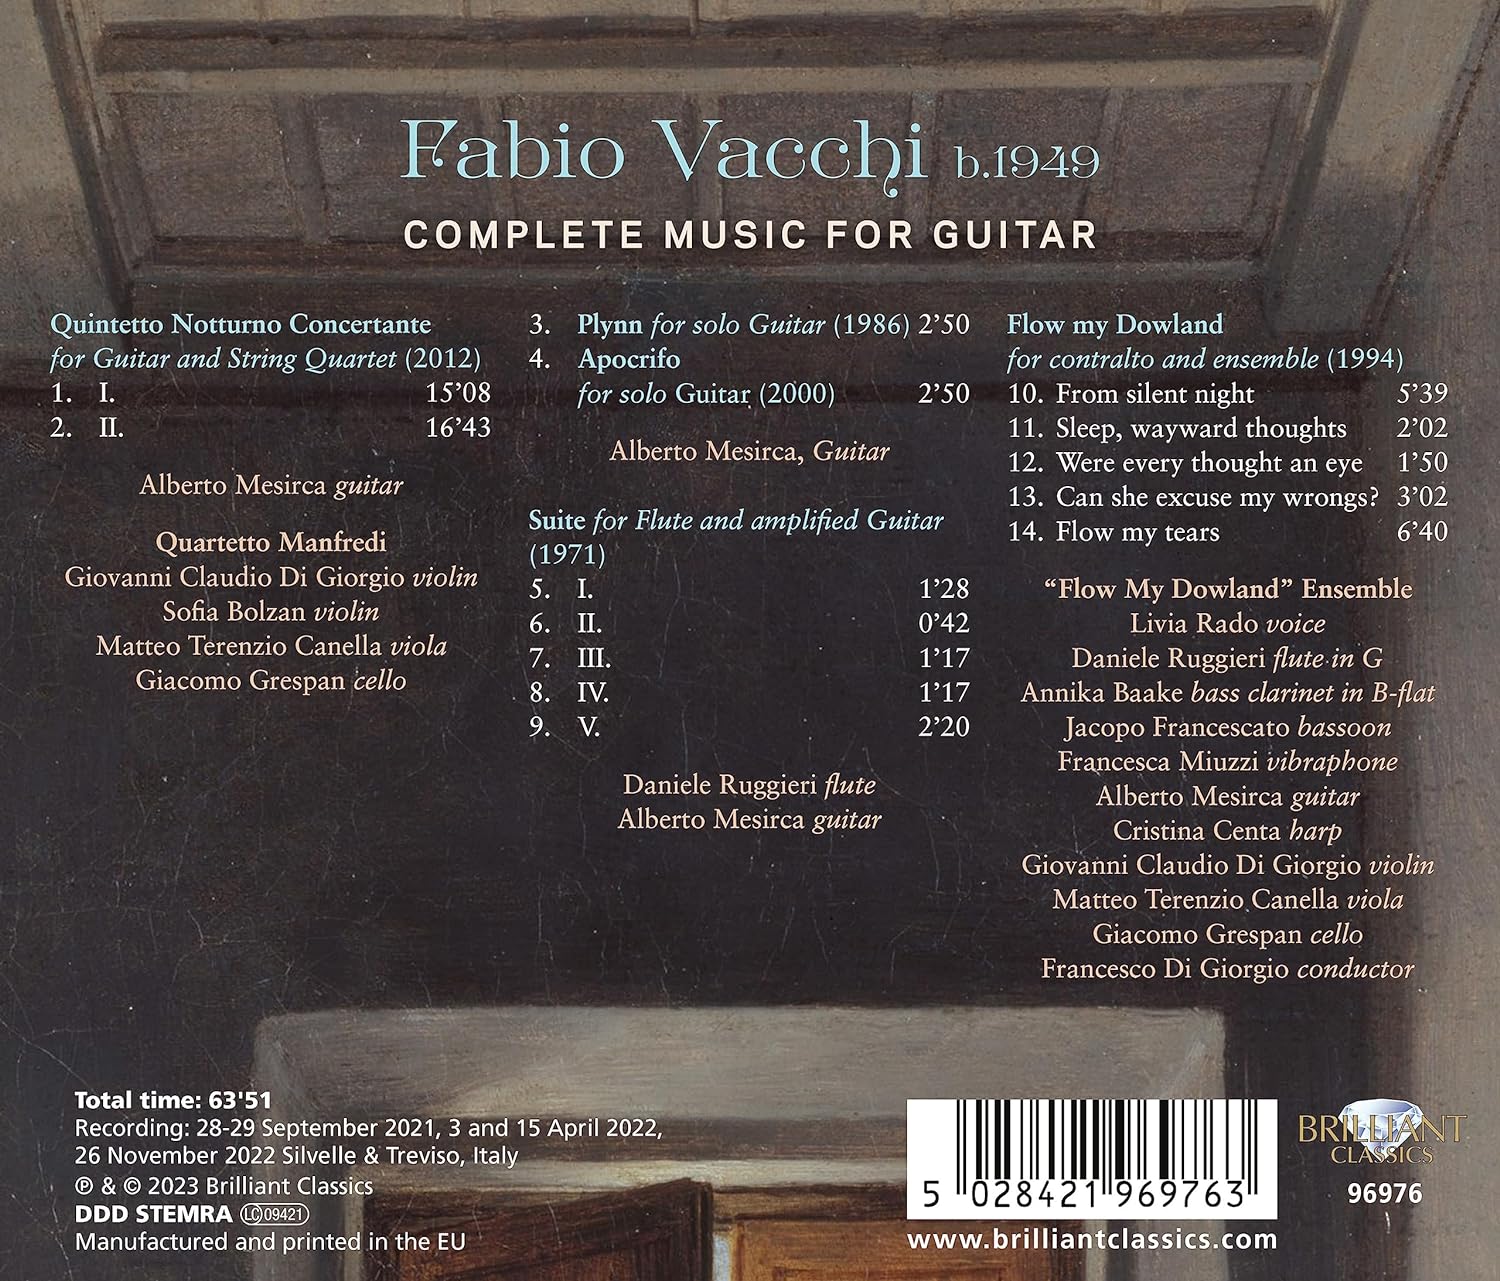 Alberto Mesirca 바키: 기타를 위한 작품 전곡 (Vacchi: Complete Music for Guitar)